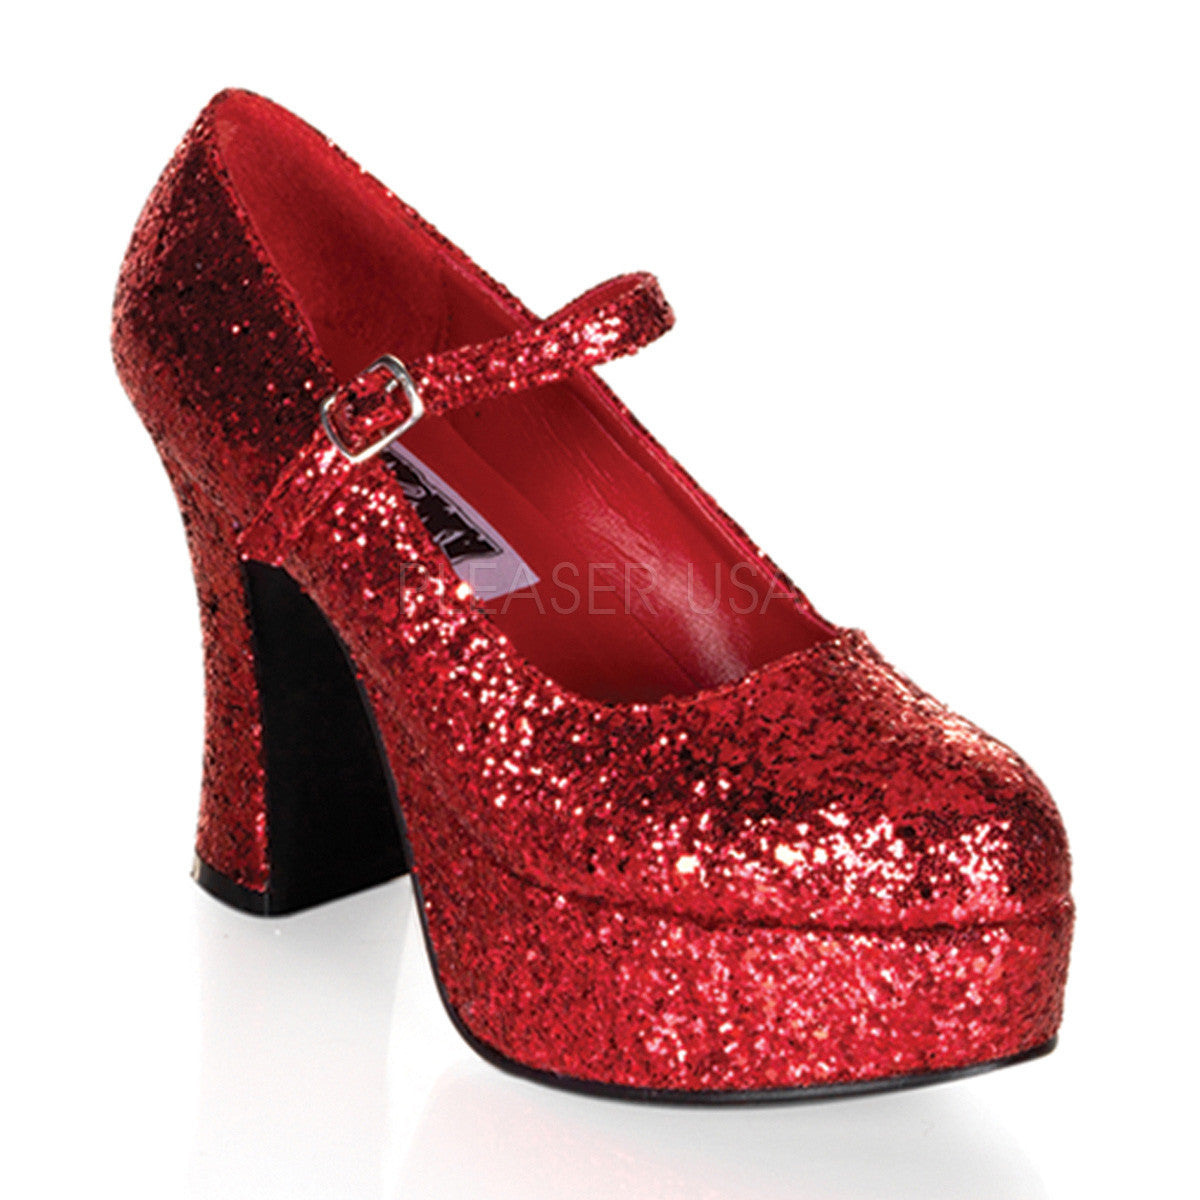 FUNTASMA MARYJANE-50G Red Glitter MaryJane Pumps - Shoecup.com